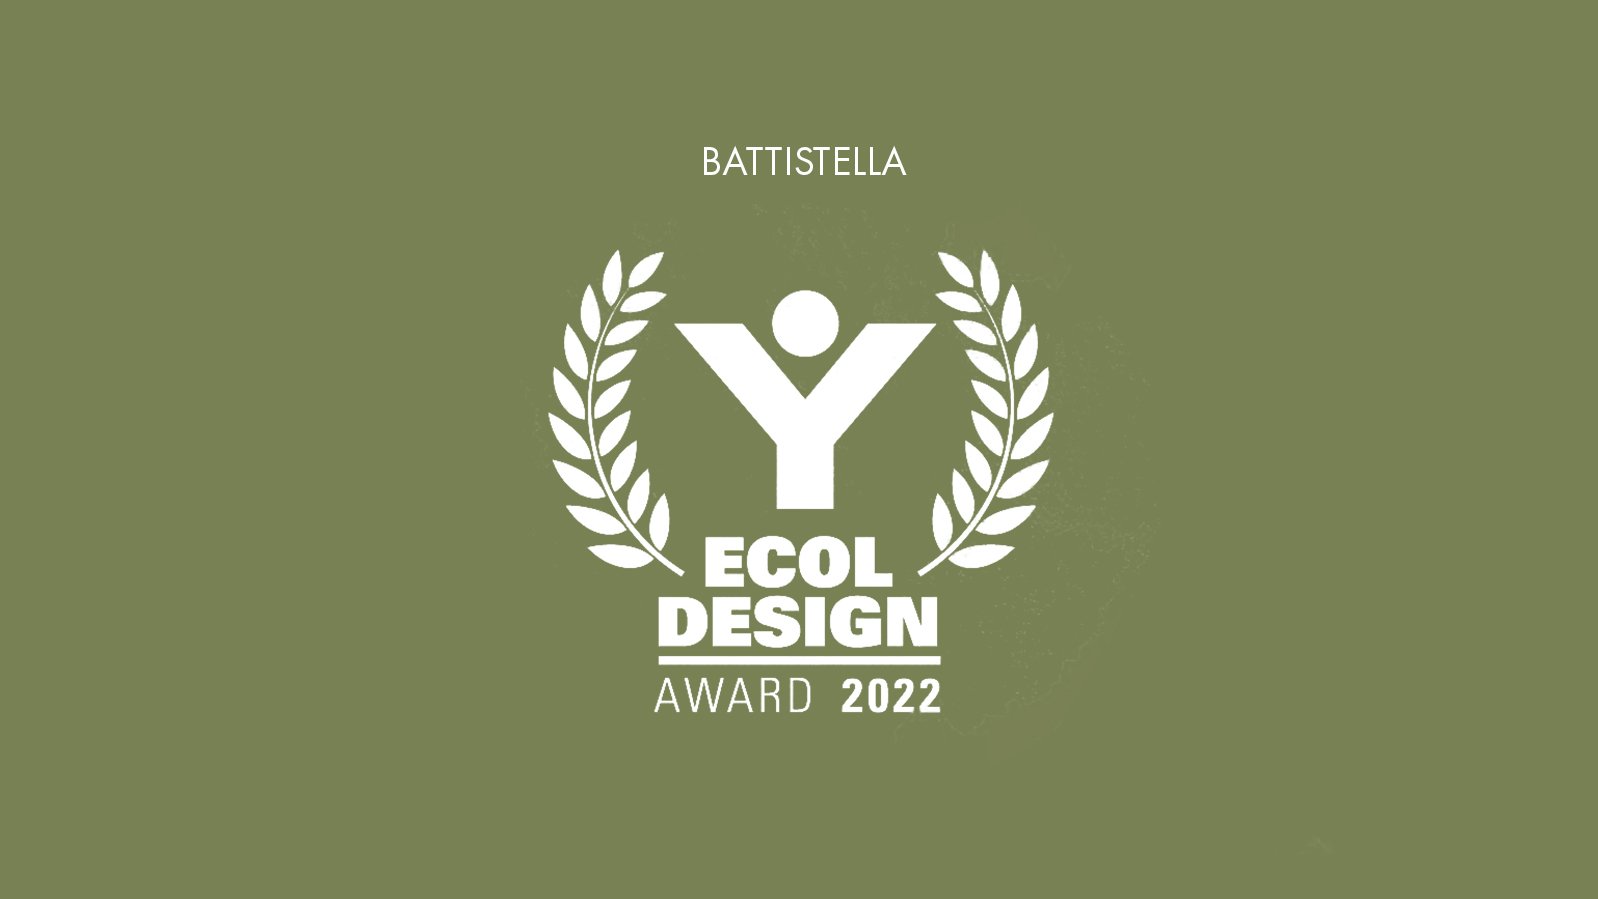 Recycla ha premiado a Battistella con el ECOL DESIGN AWARD